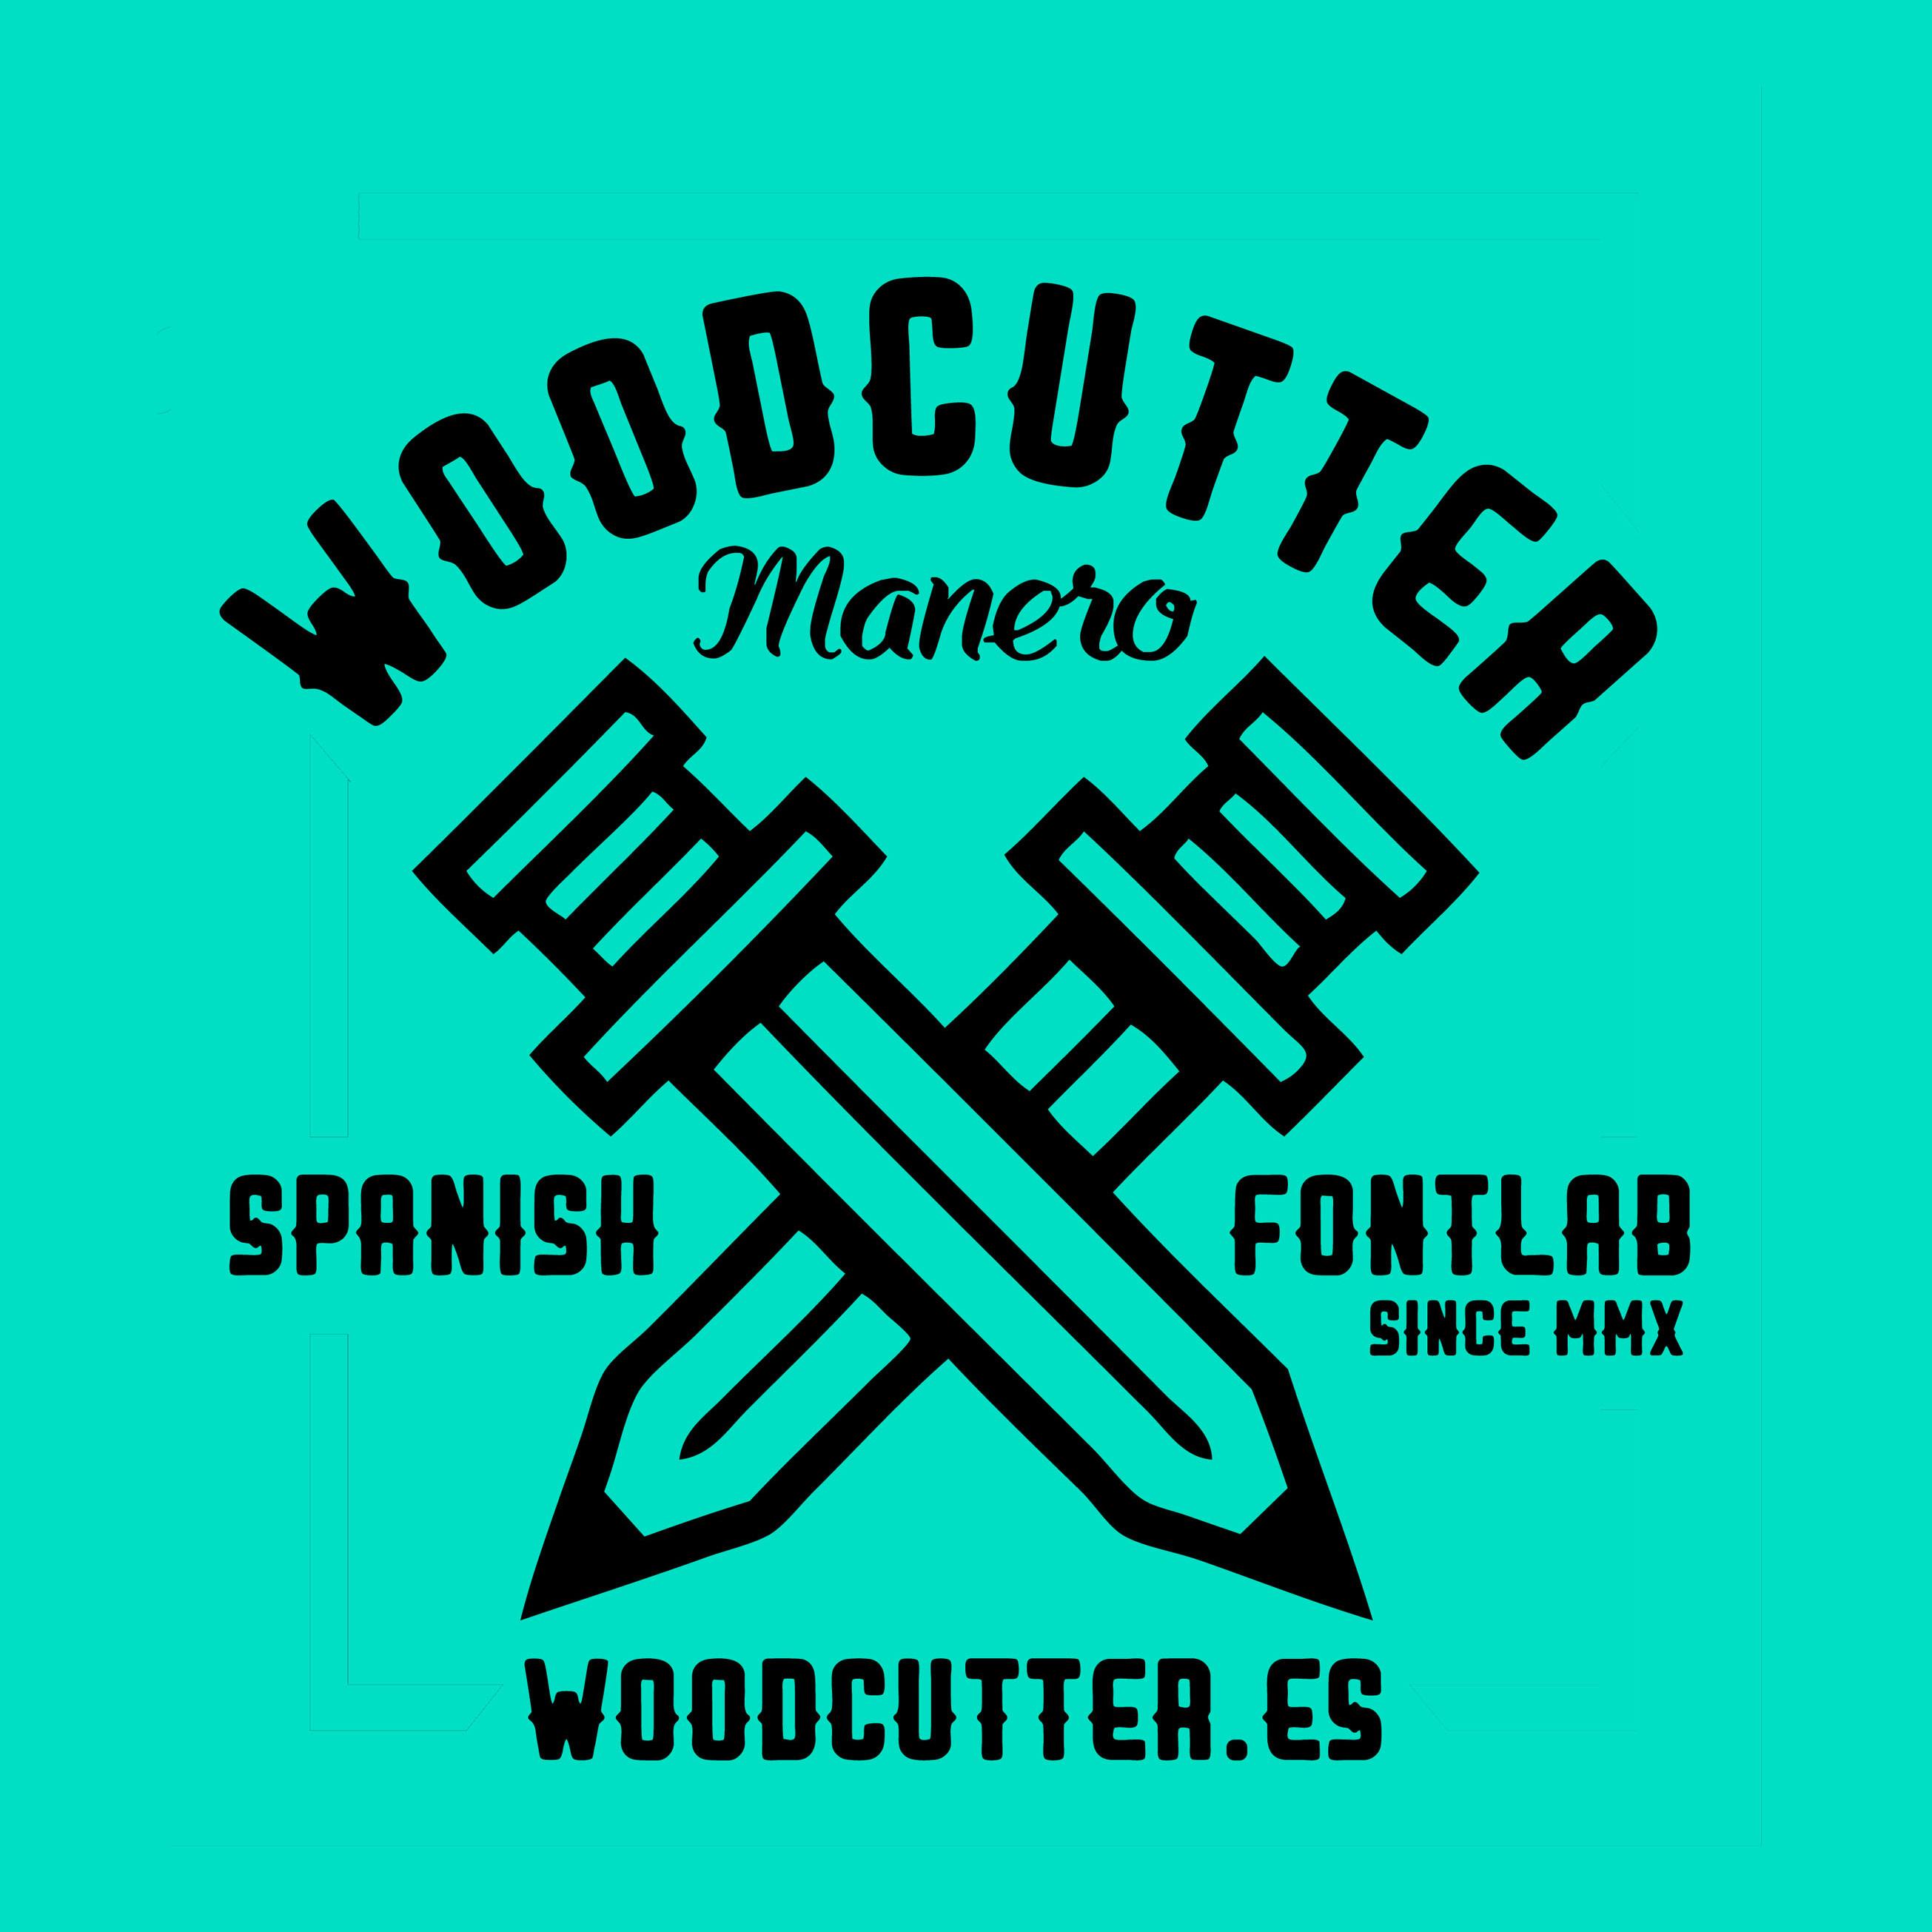 Woodcutter Manero